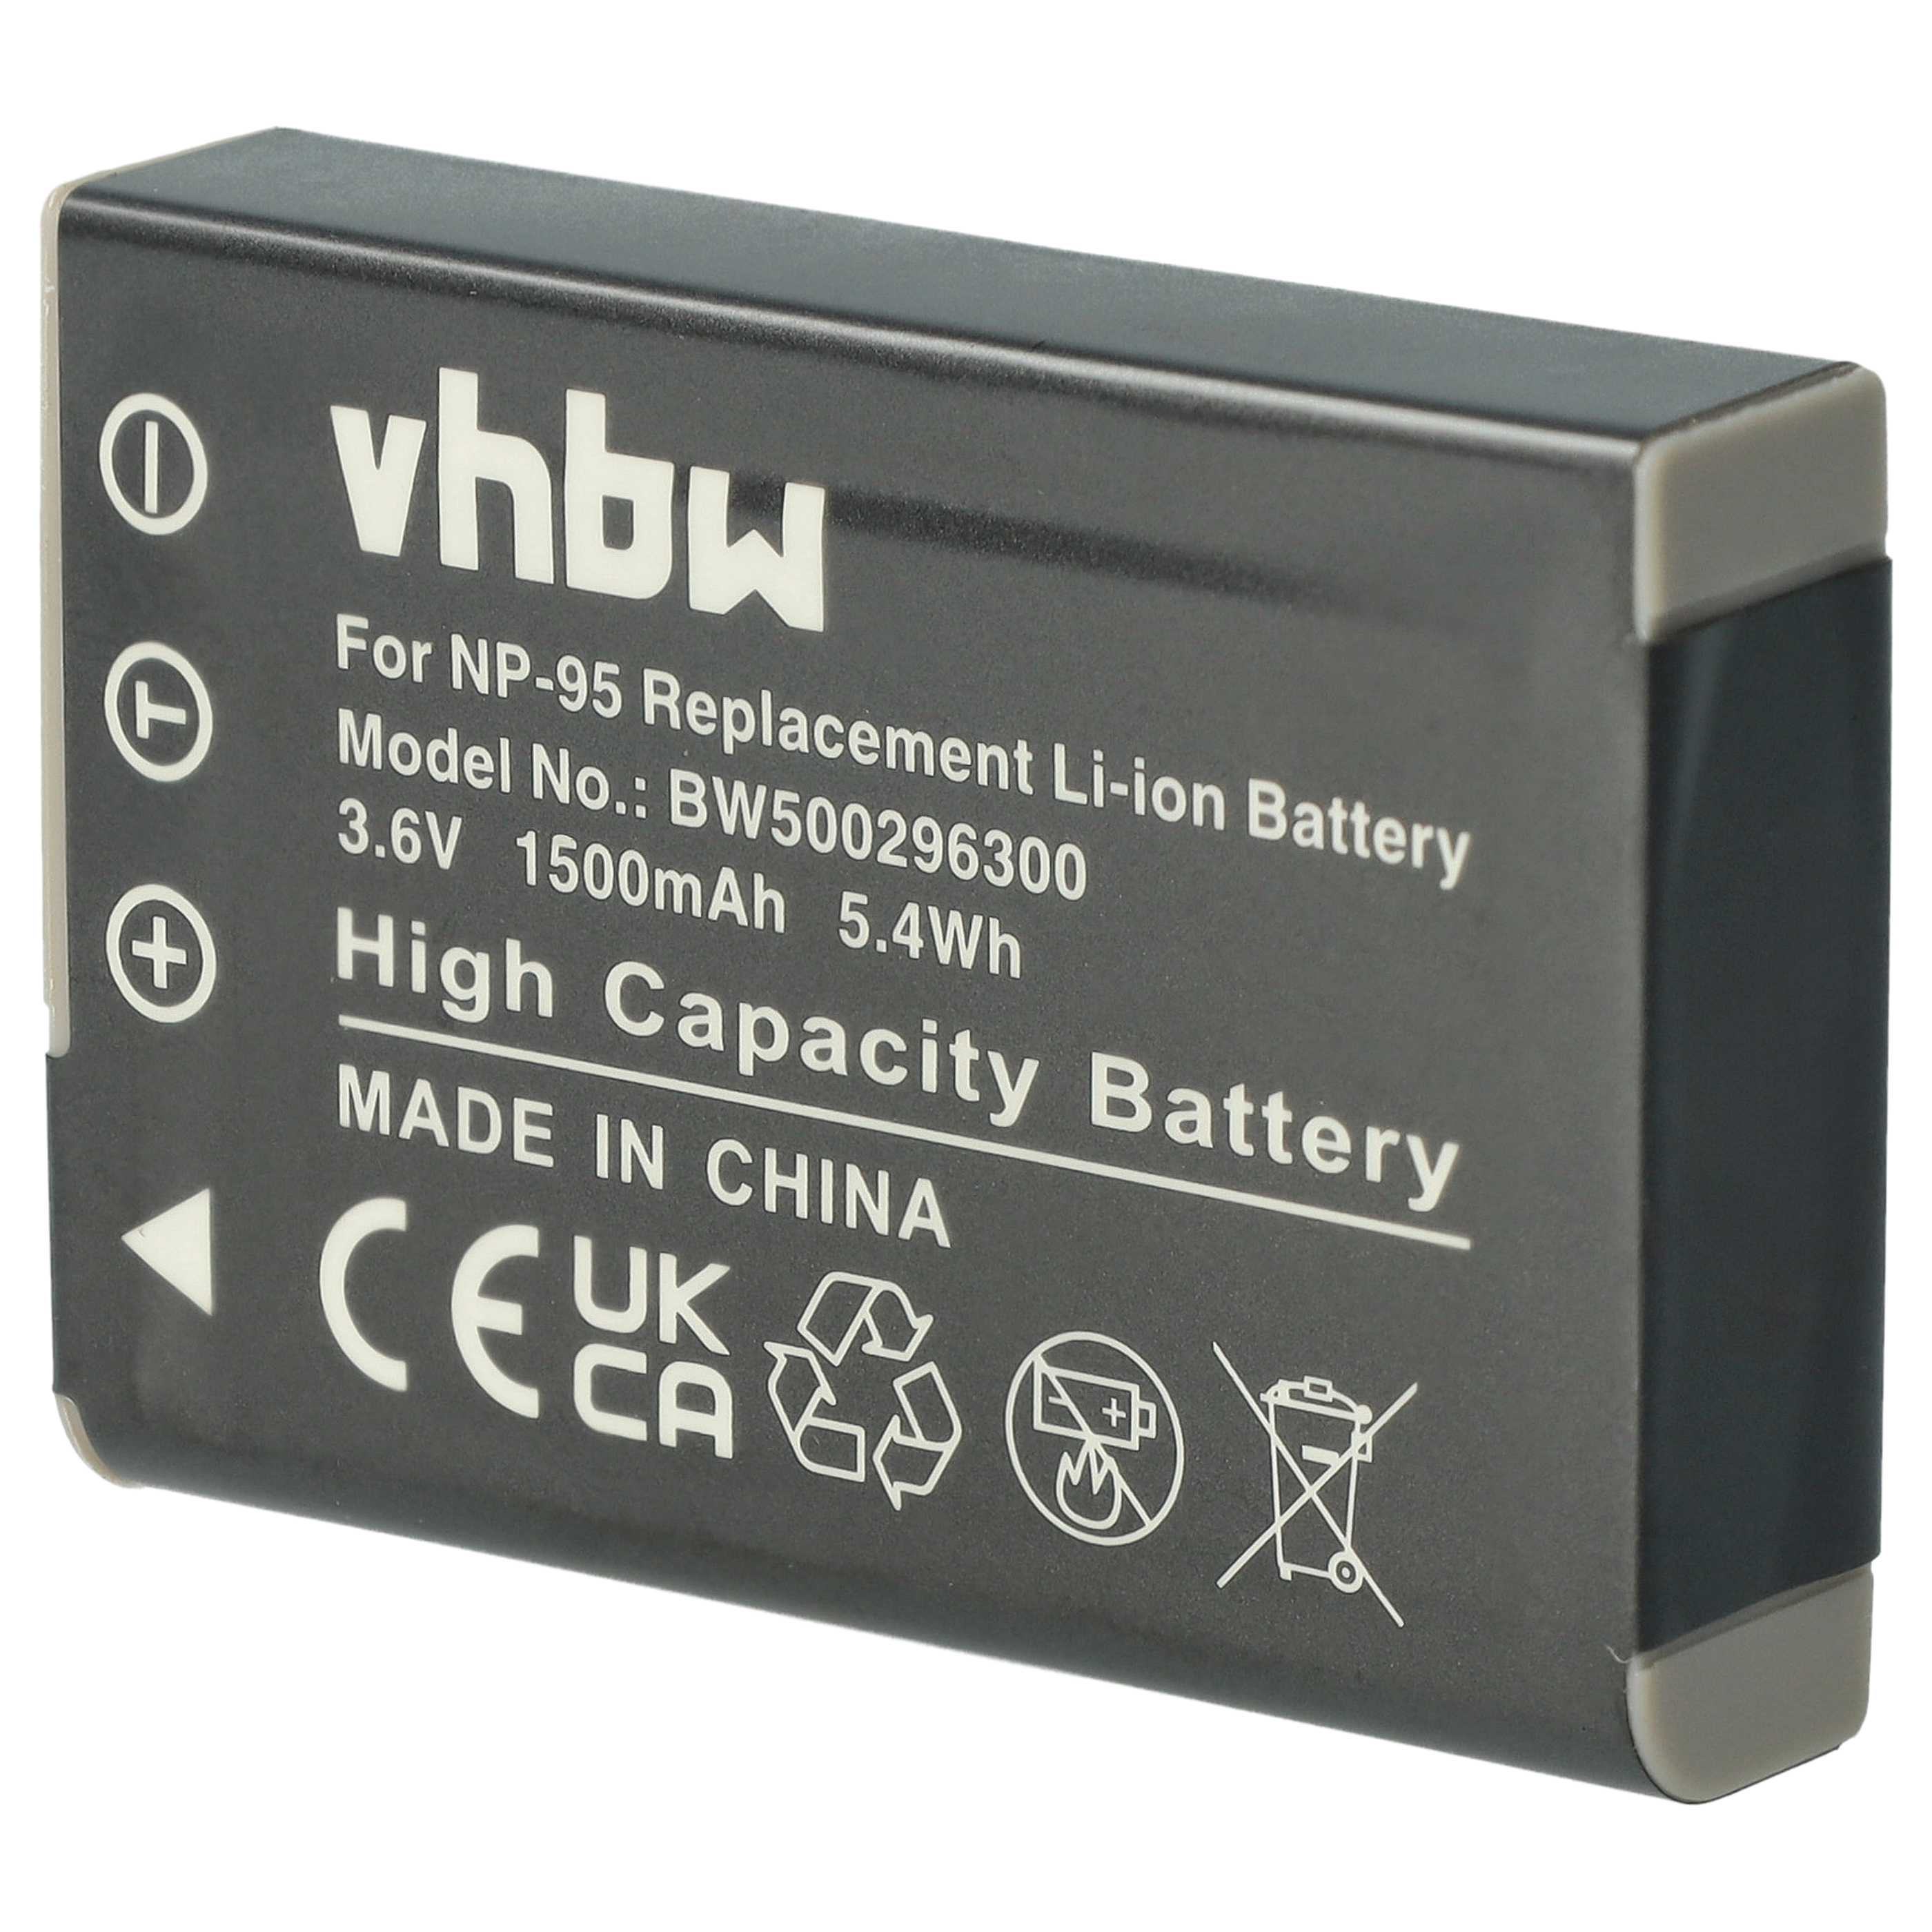 Batterie remplace Fuji / Fujifilm NP-95 pour appareil photo - 1500mAh 3,6V Li-ion